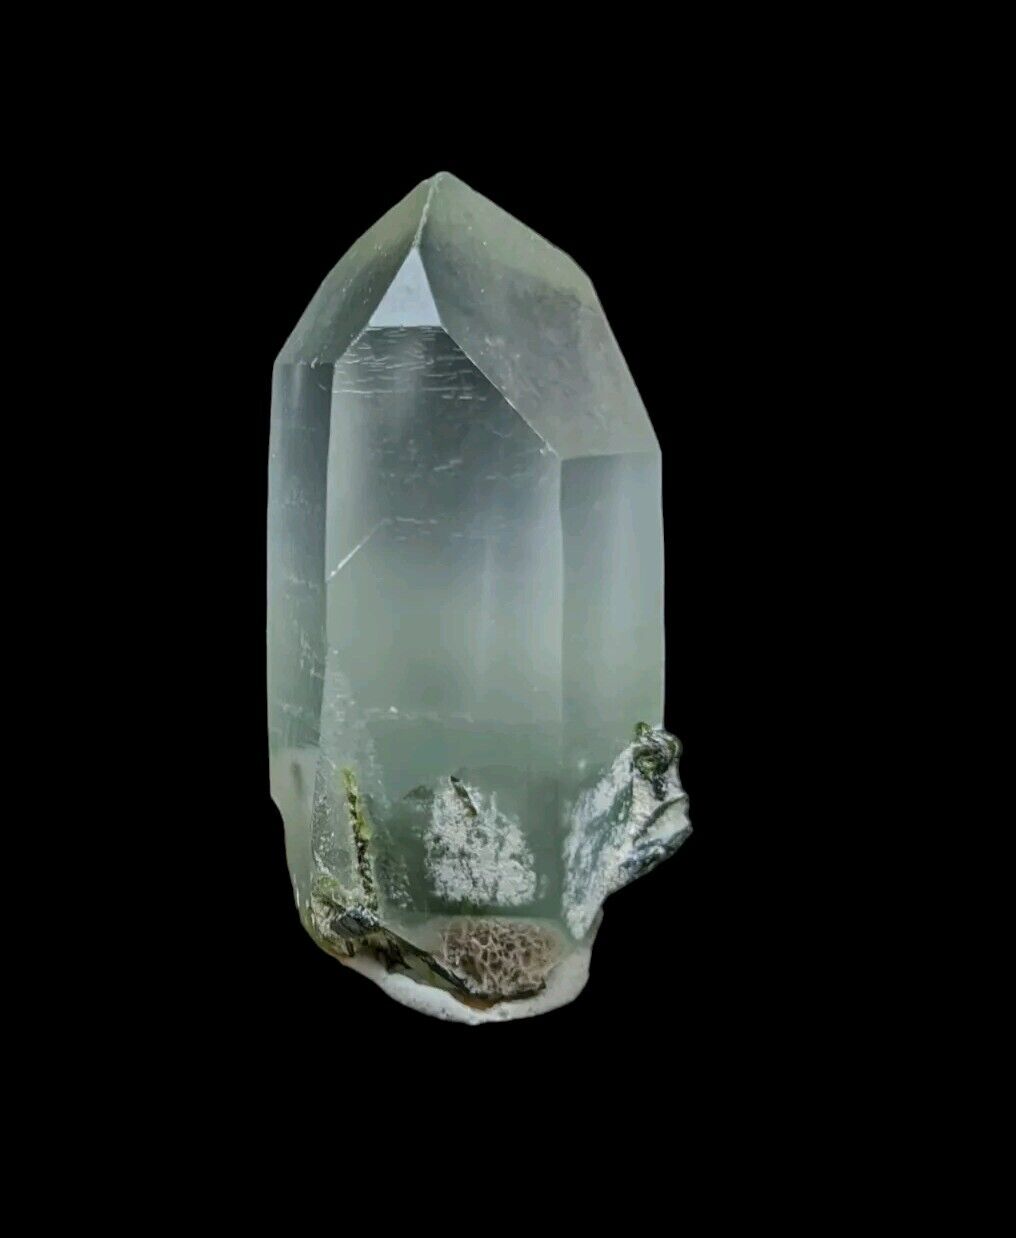 Aesthetic Amphibole & Epidote Included Quartz Crystal From Baluchistan Pakistan.